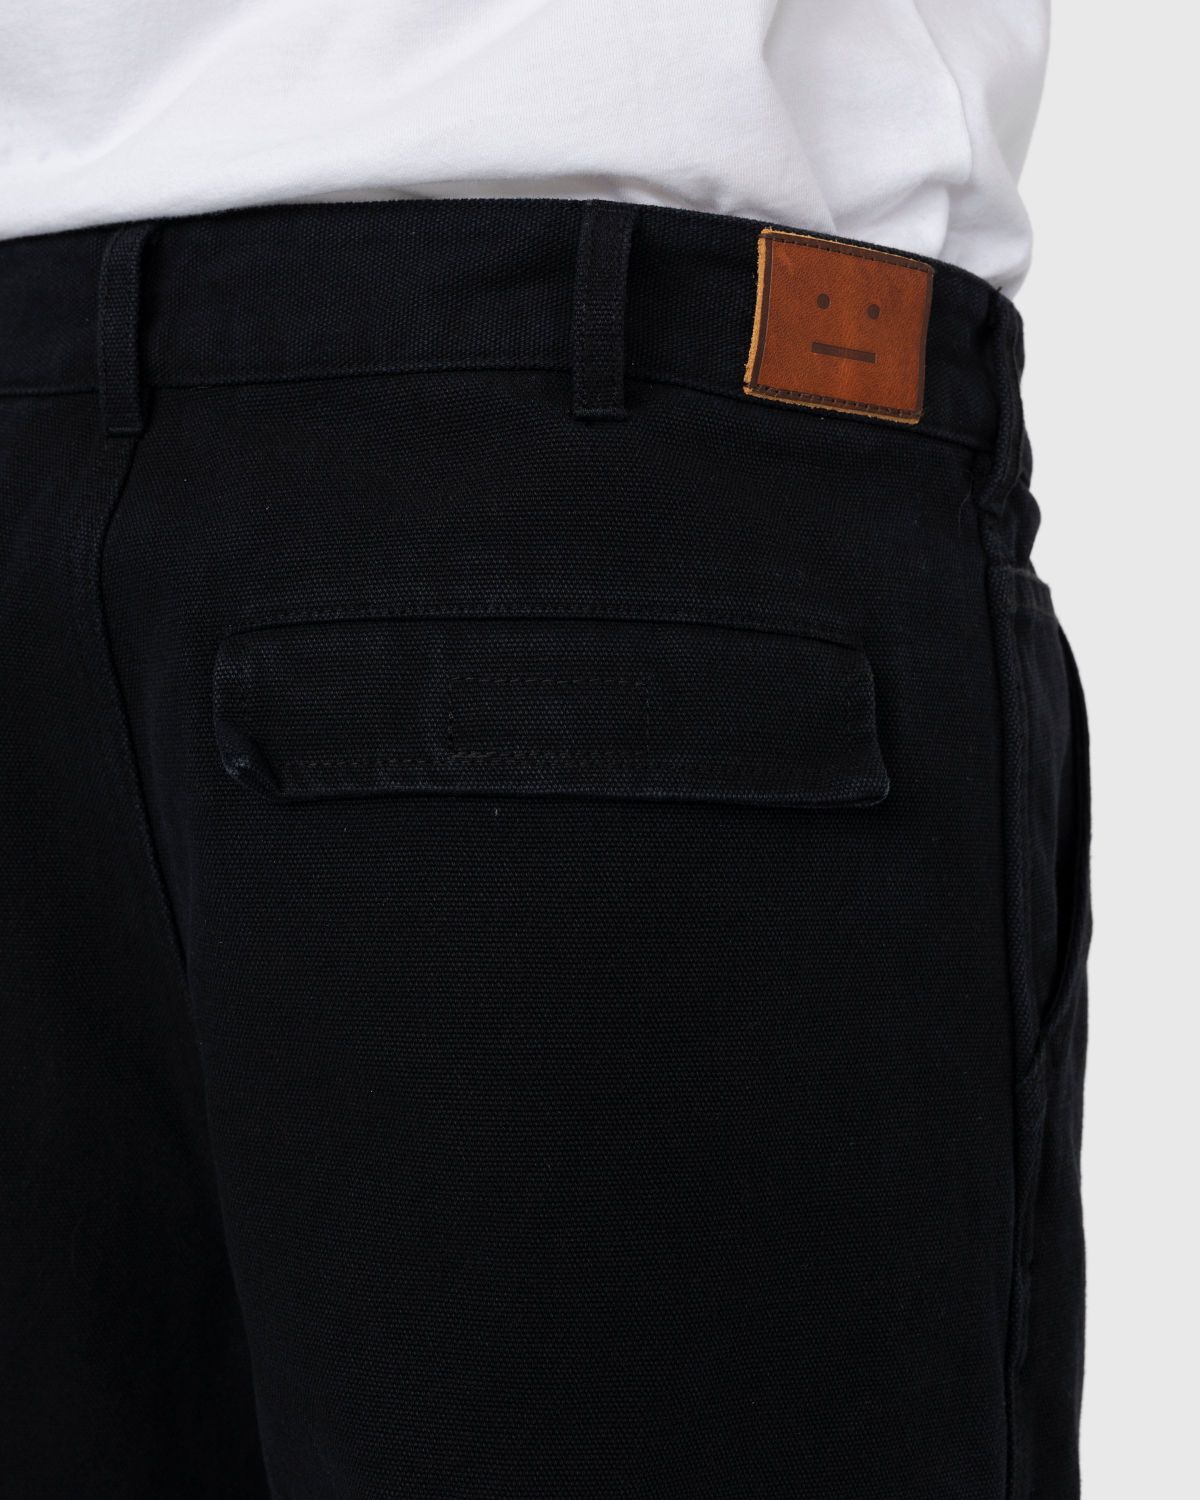 Acne Studios – Cotton Workwear Trousers Black - Pants - Black - Image 6